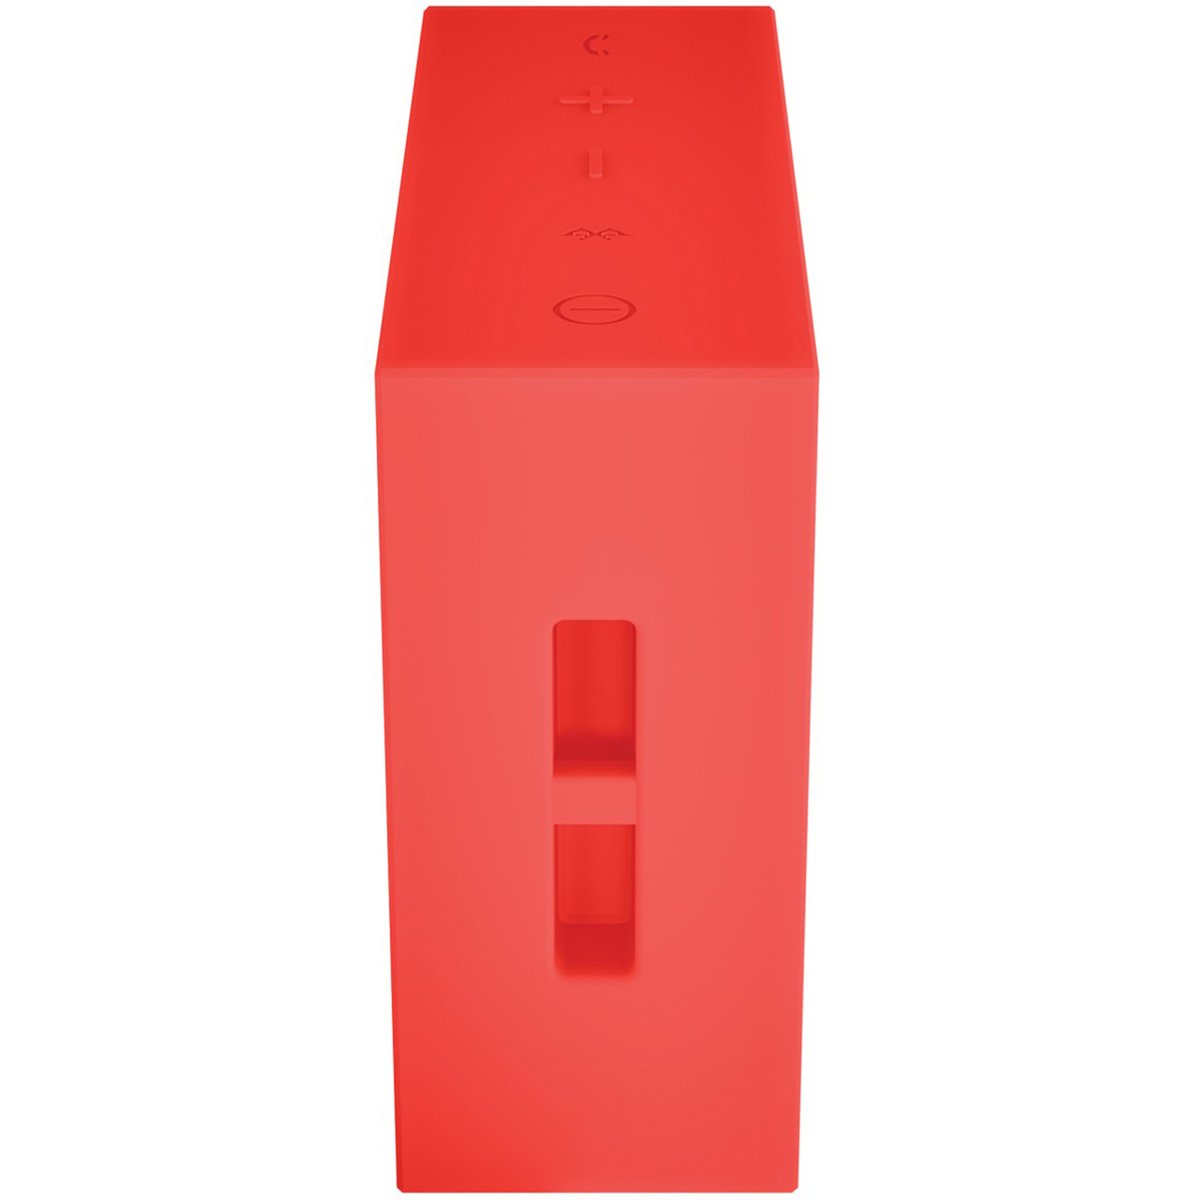 JBL Portable Bluetooth Speaker JBLGO Red